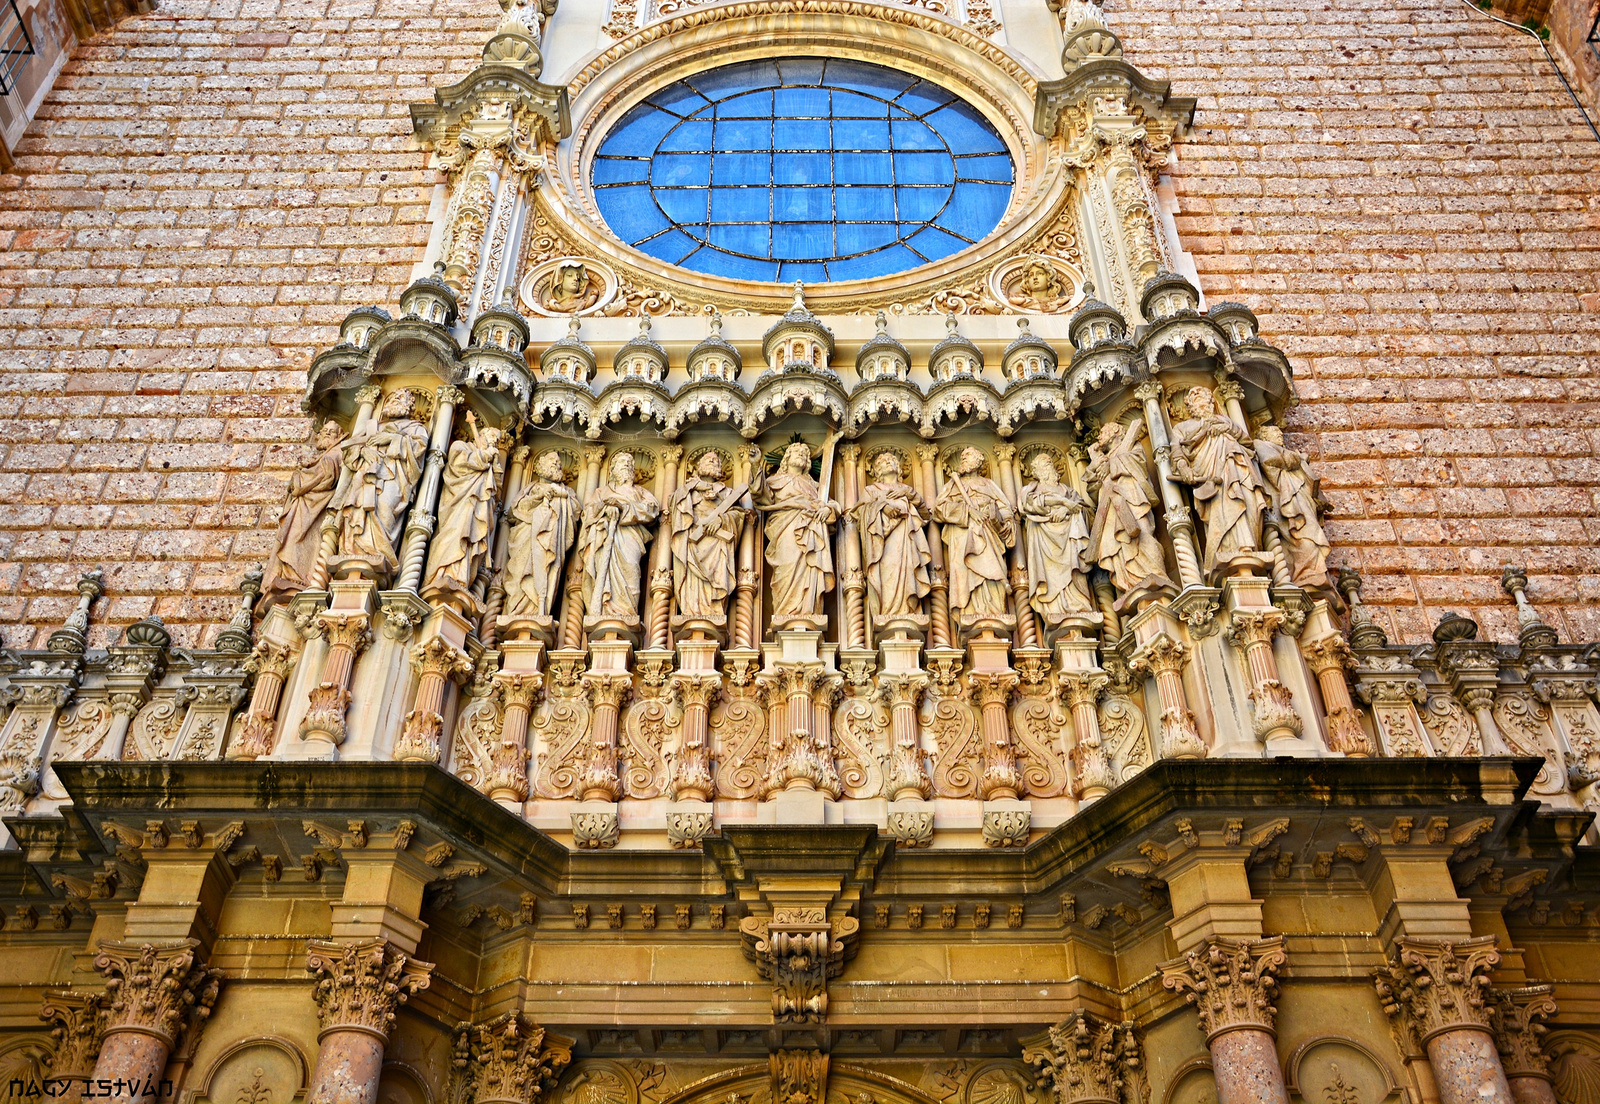 Basilica At The Montserrat Monastery - Montserrat 0060..